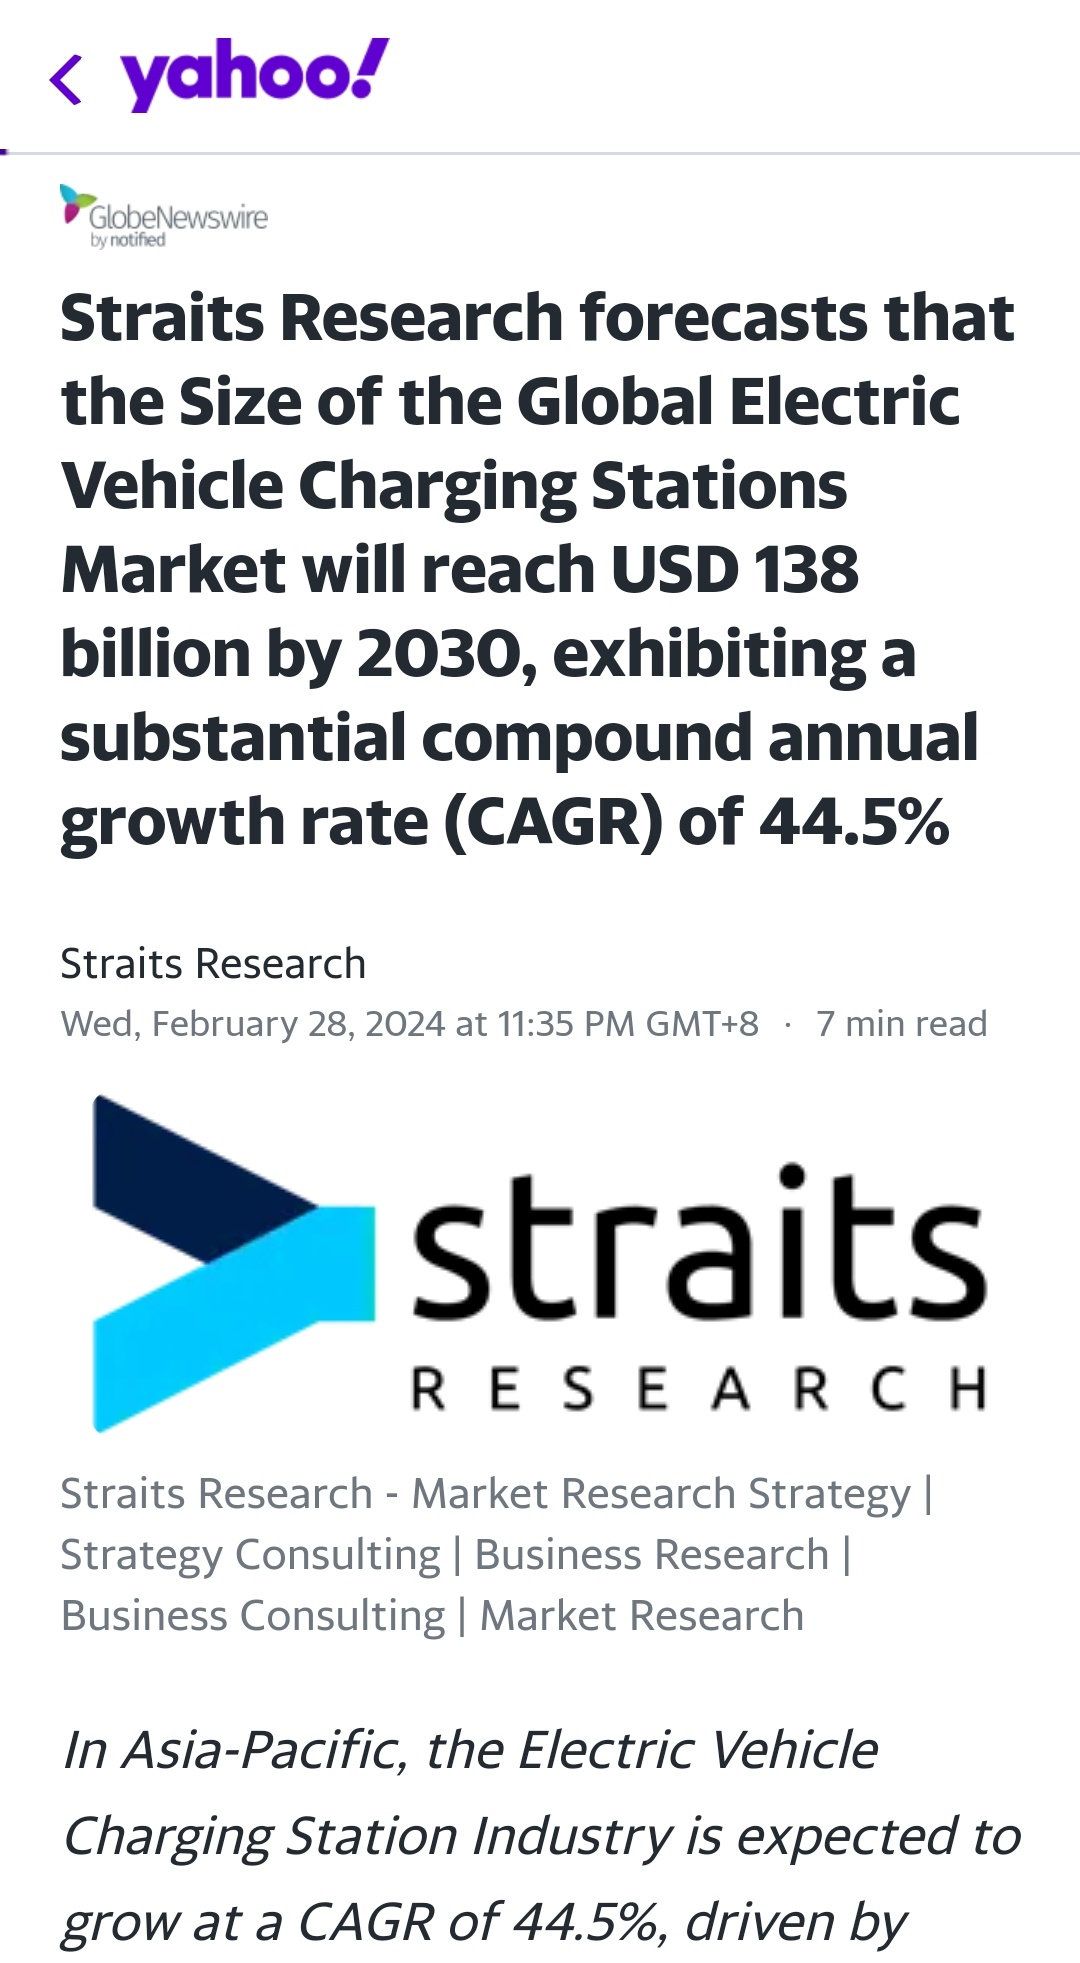 Global EV Charging Stations Market reach USD 138B by 2030 44.5% per year growth